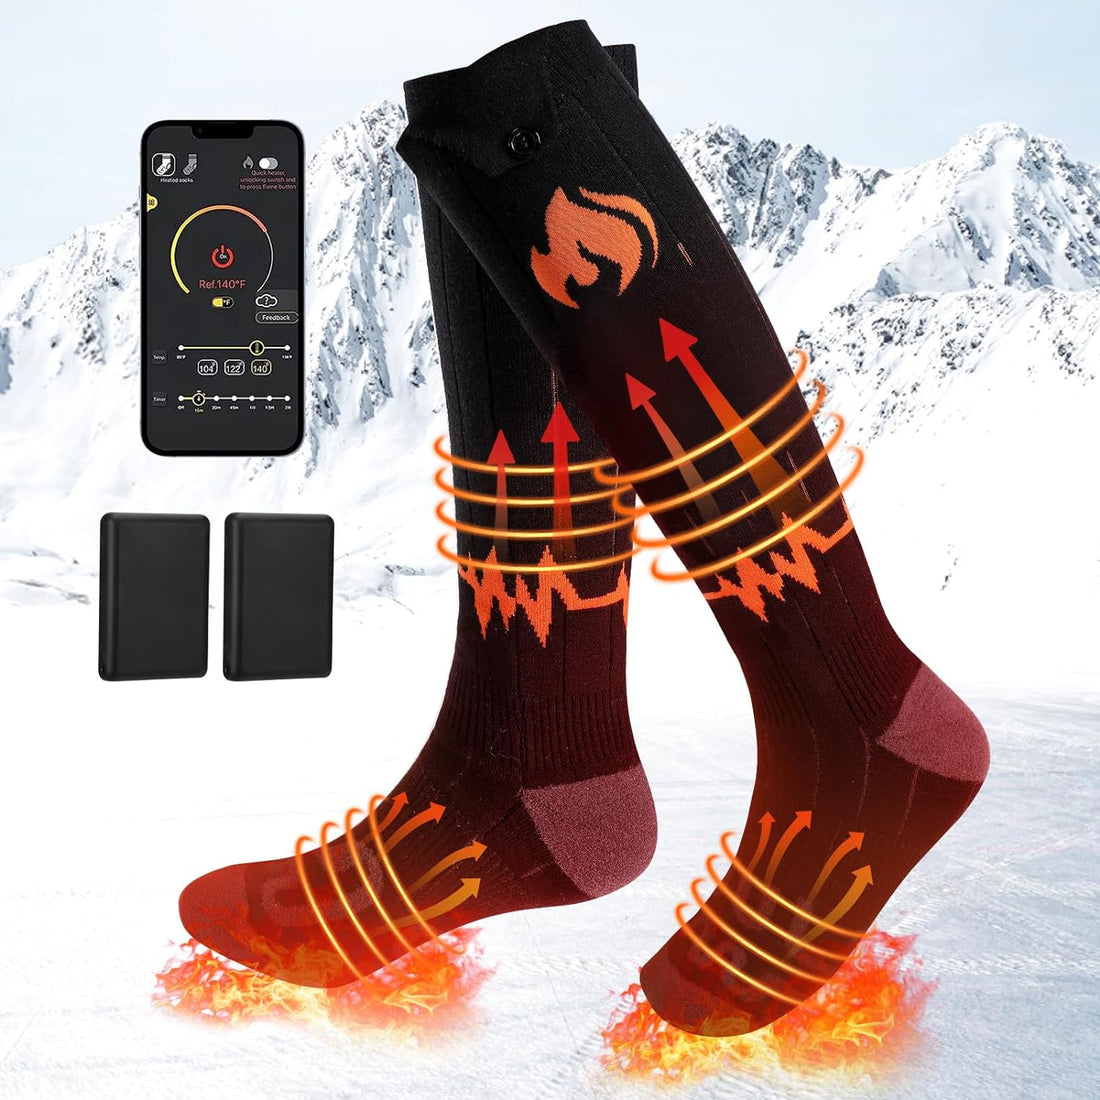 Ceuku Heated Socks for Men Women 5V 5000mAH Battery Winter Heating Socks with APP Control, Rechargeable Washable Electric Socks Electric Heated Socks for Hiking Biking Camping Skiing Hunting